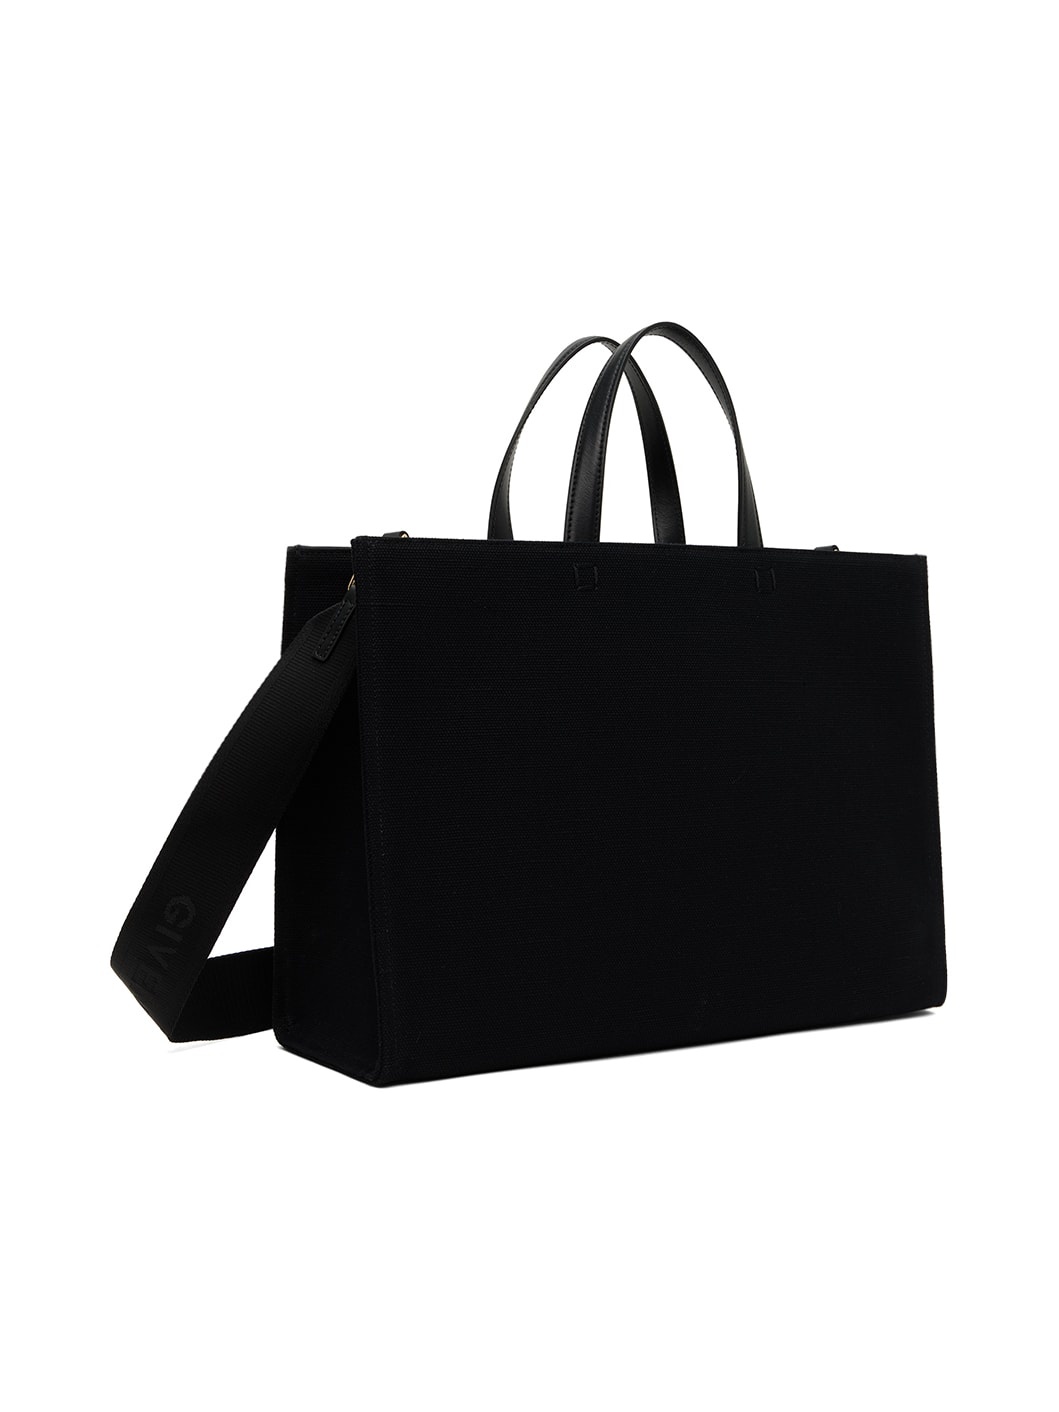 Black Medium G-Tote Bag - 3